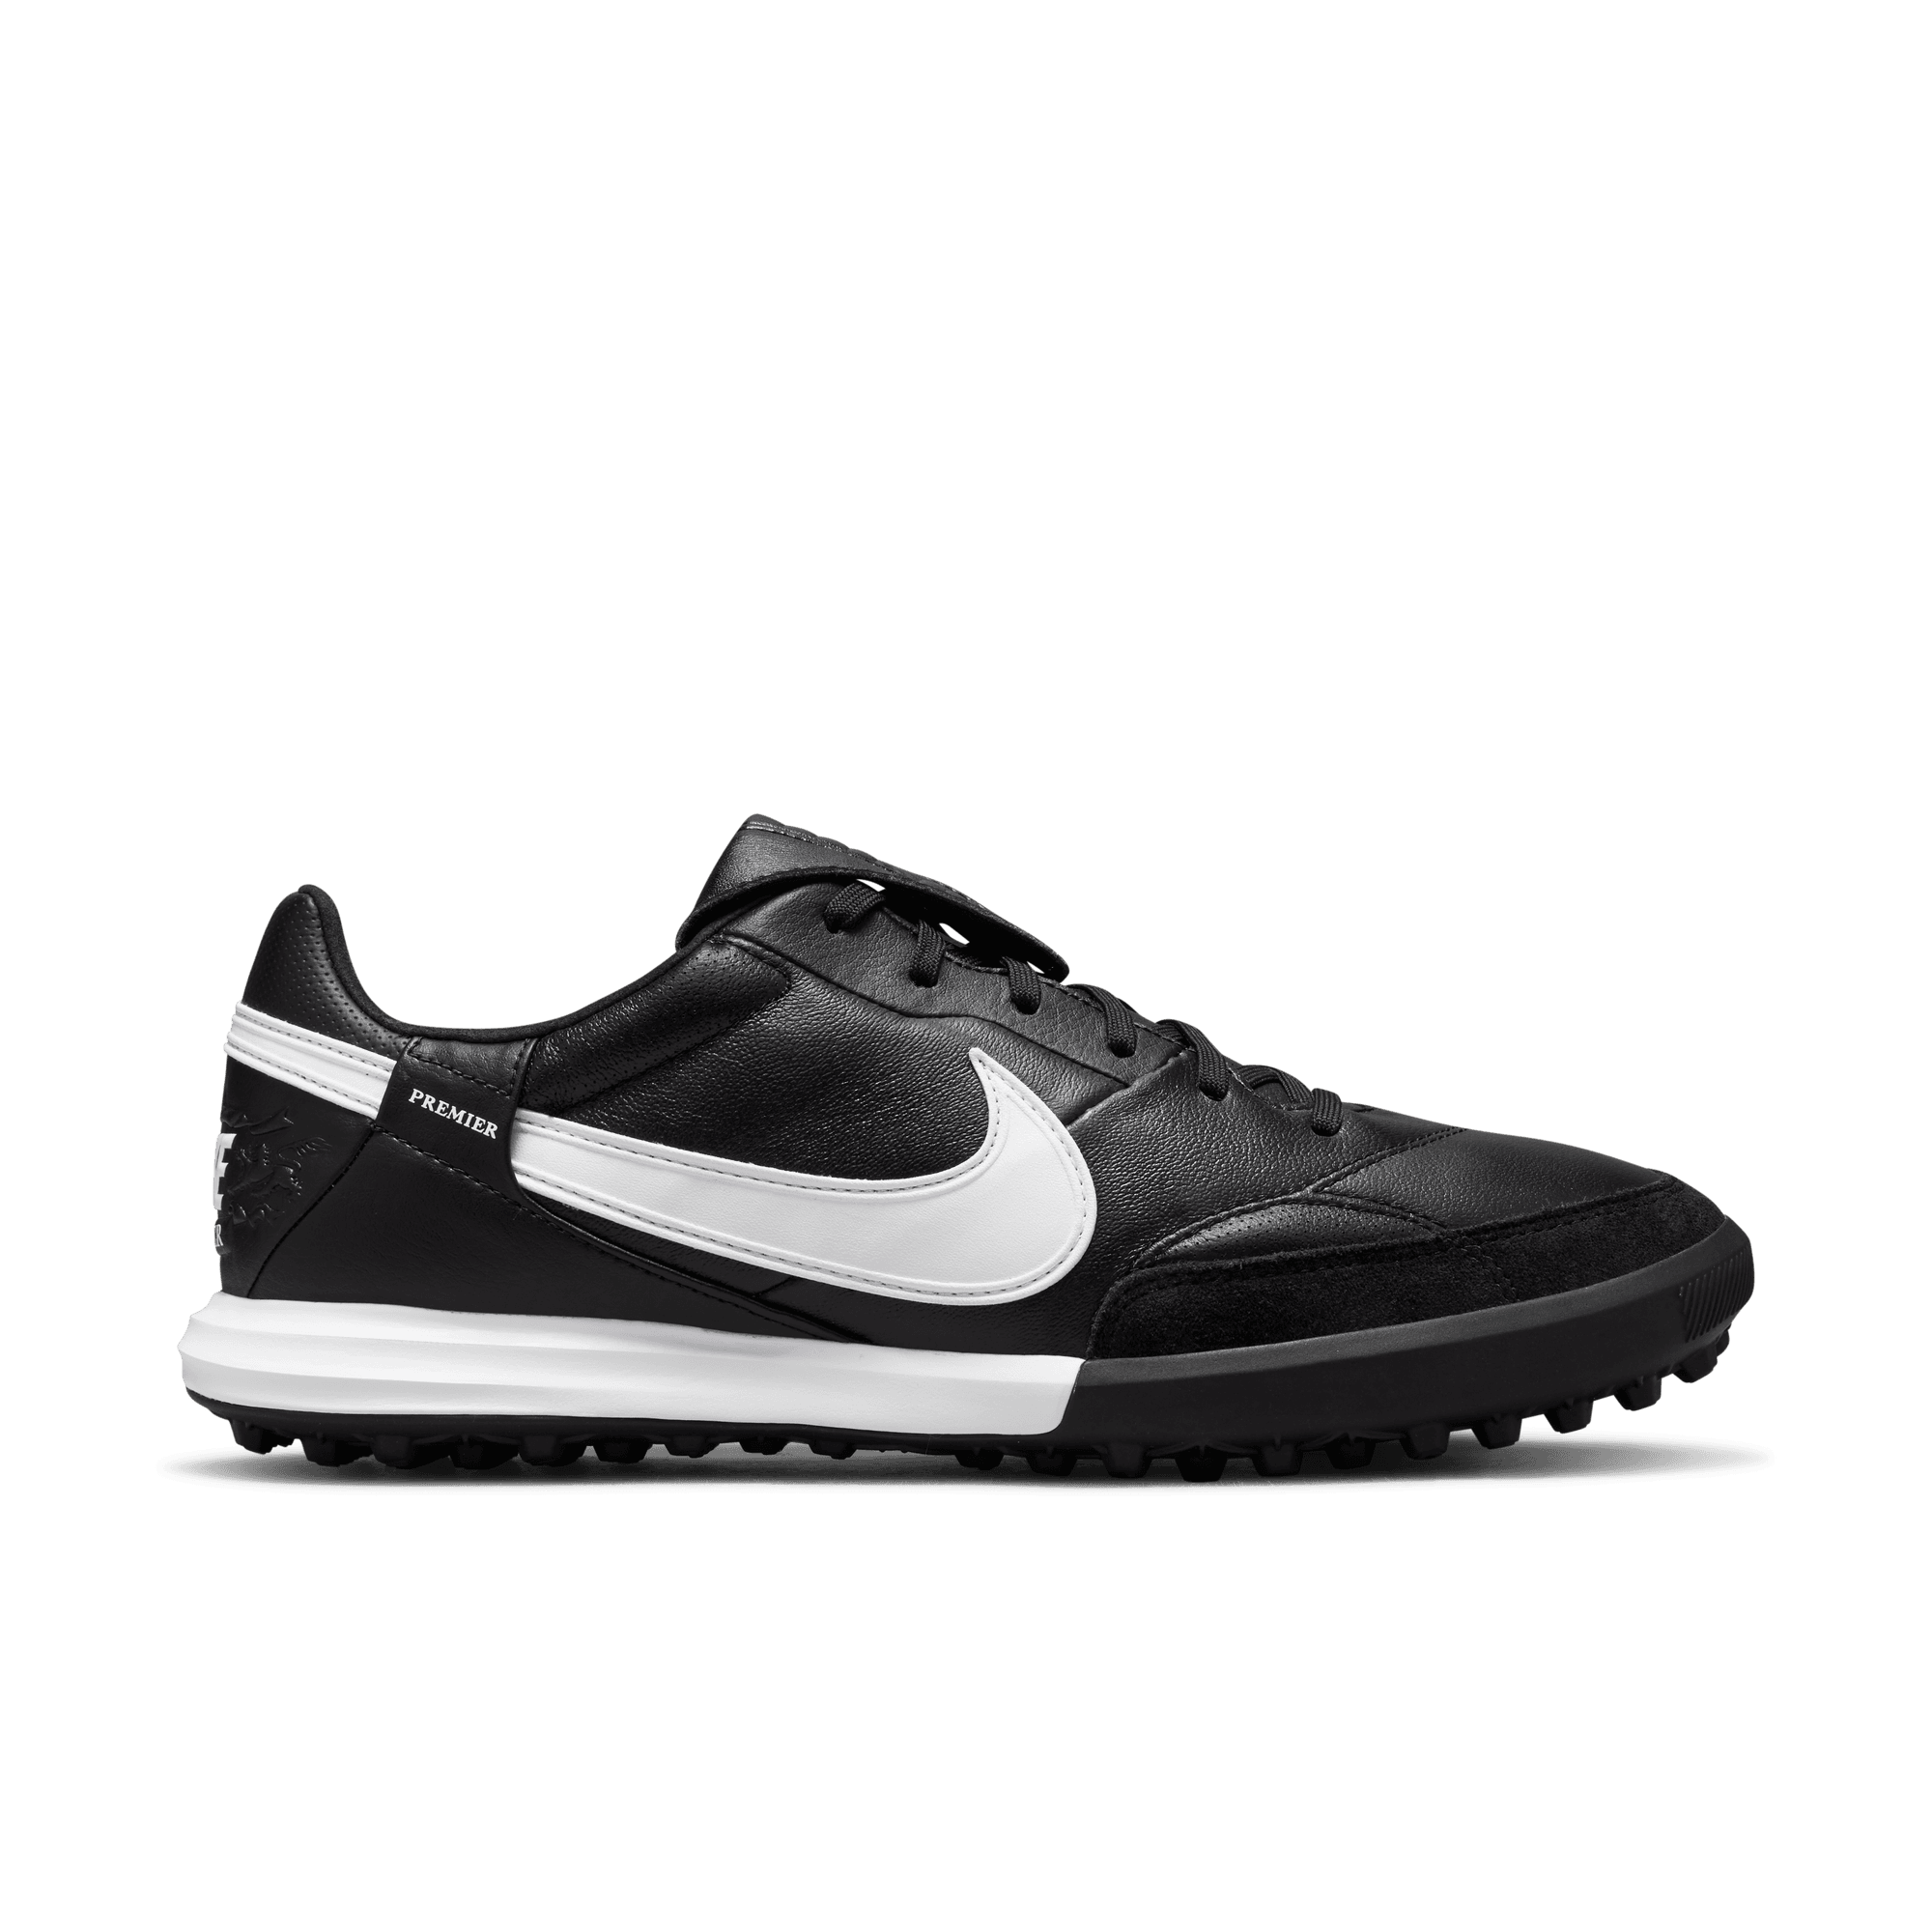 Invertir Anfibio Autónomo Nike Premier 3 TF "Black/White" Men's Turf Soccer Shoe